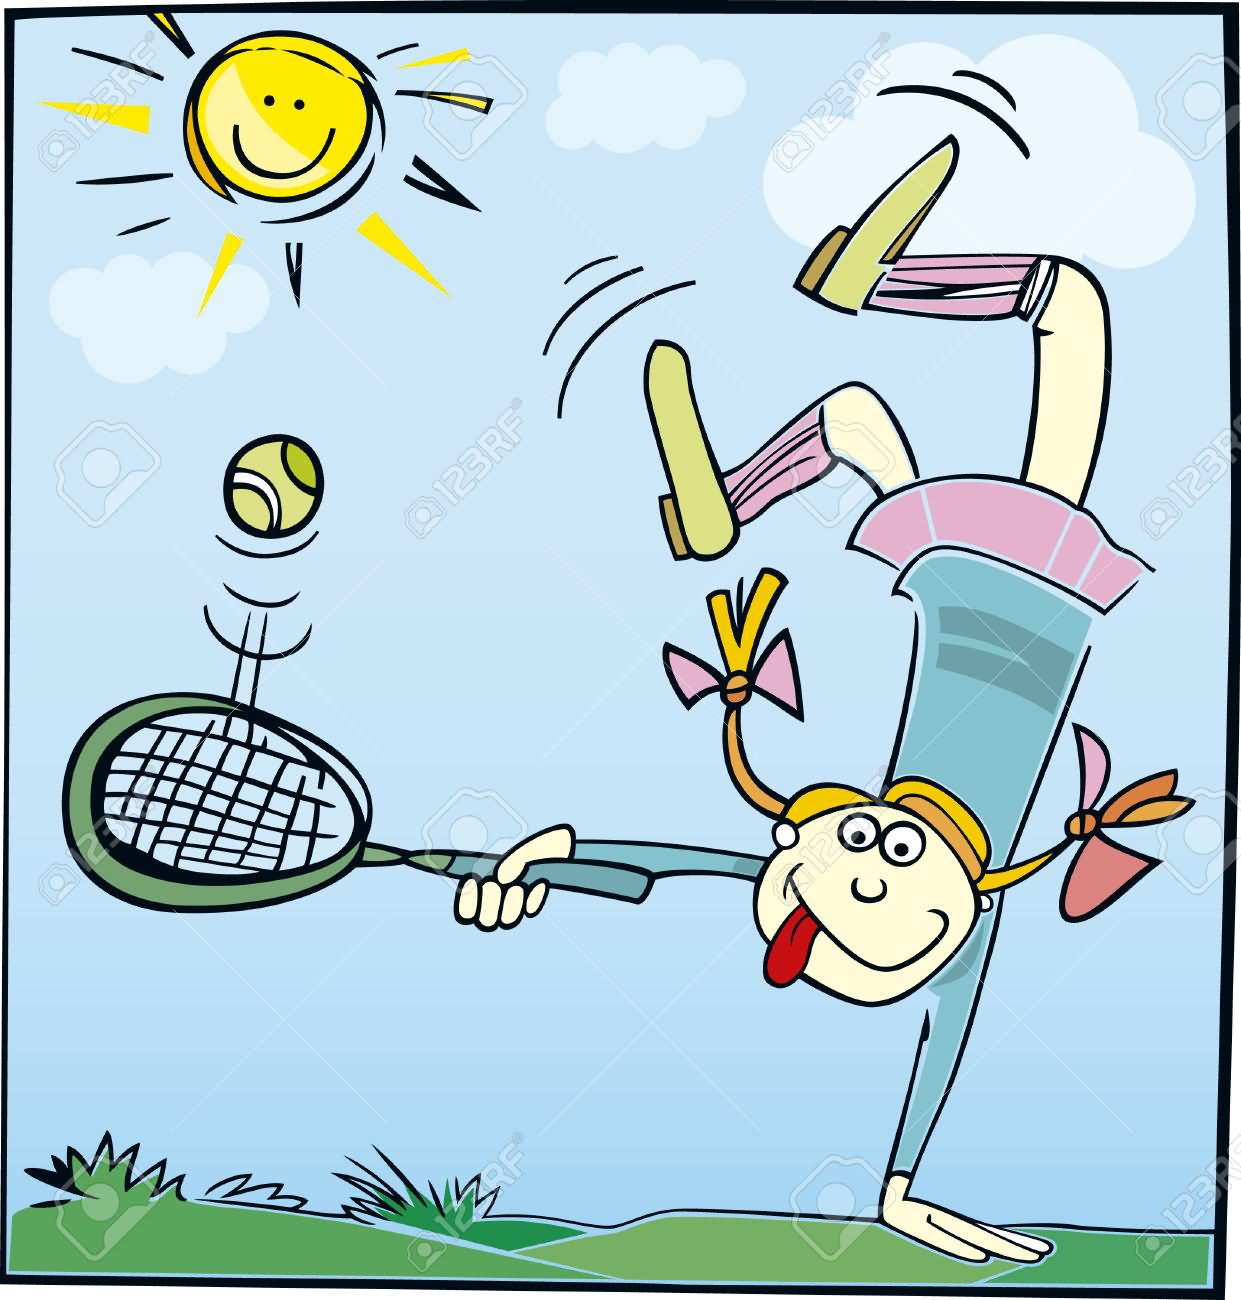 Funny Little Girl Playing Tennis Cartoon